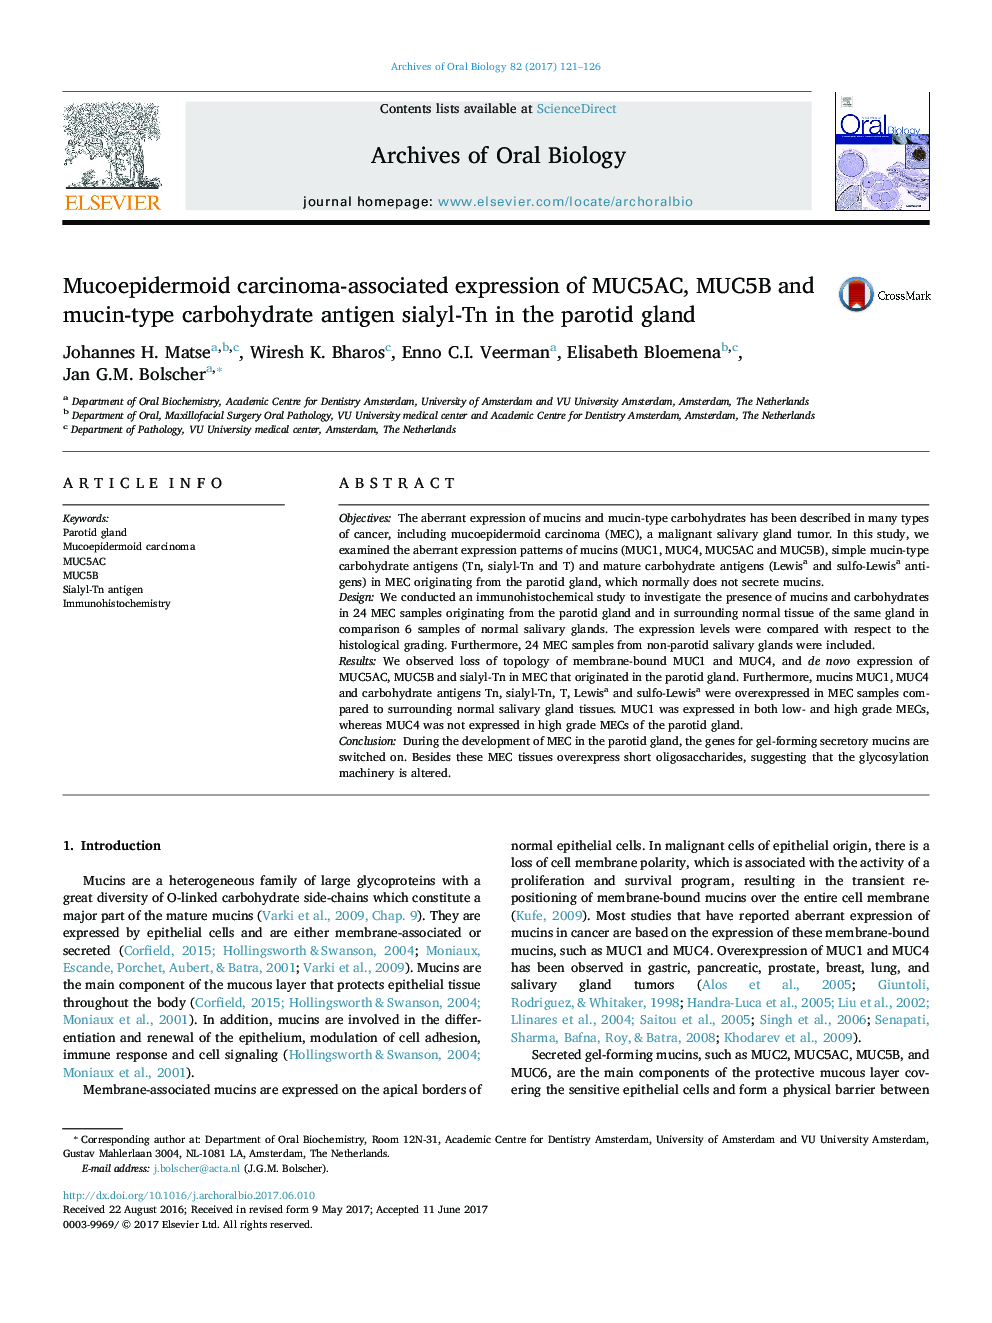 Mucoepidermoid carcinoma-associated expression of MUC5AC, MUC5B and mucin-type carbohydrate antigen sialyl-Tn in the parotid gland